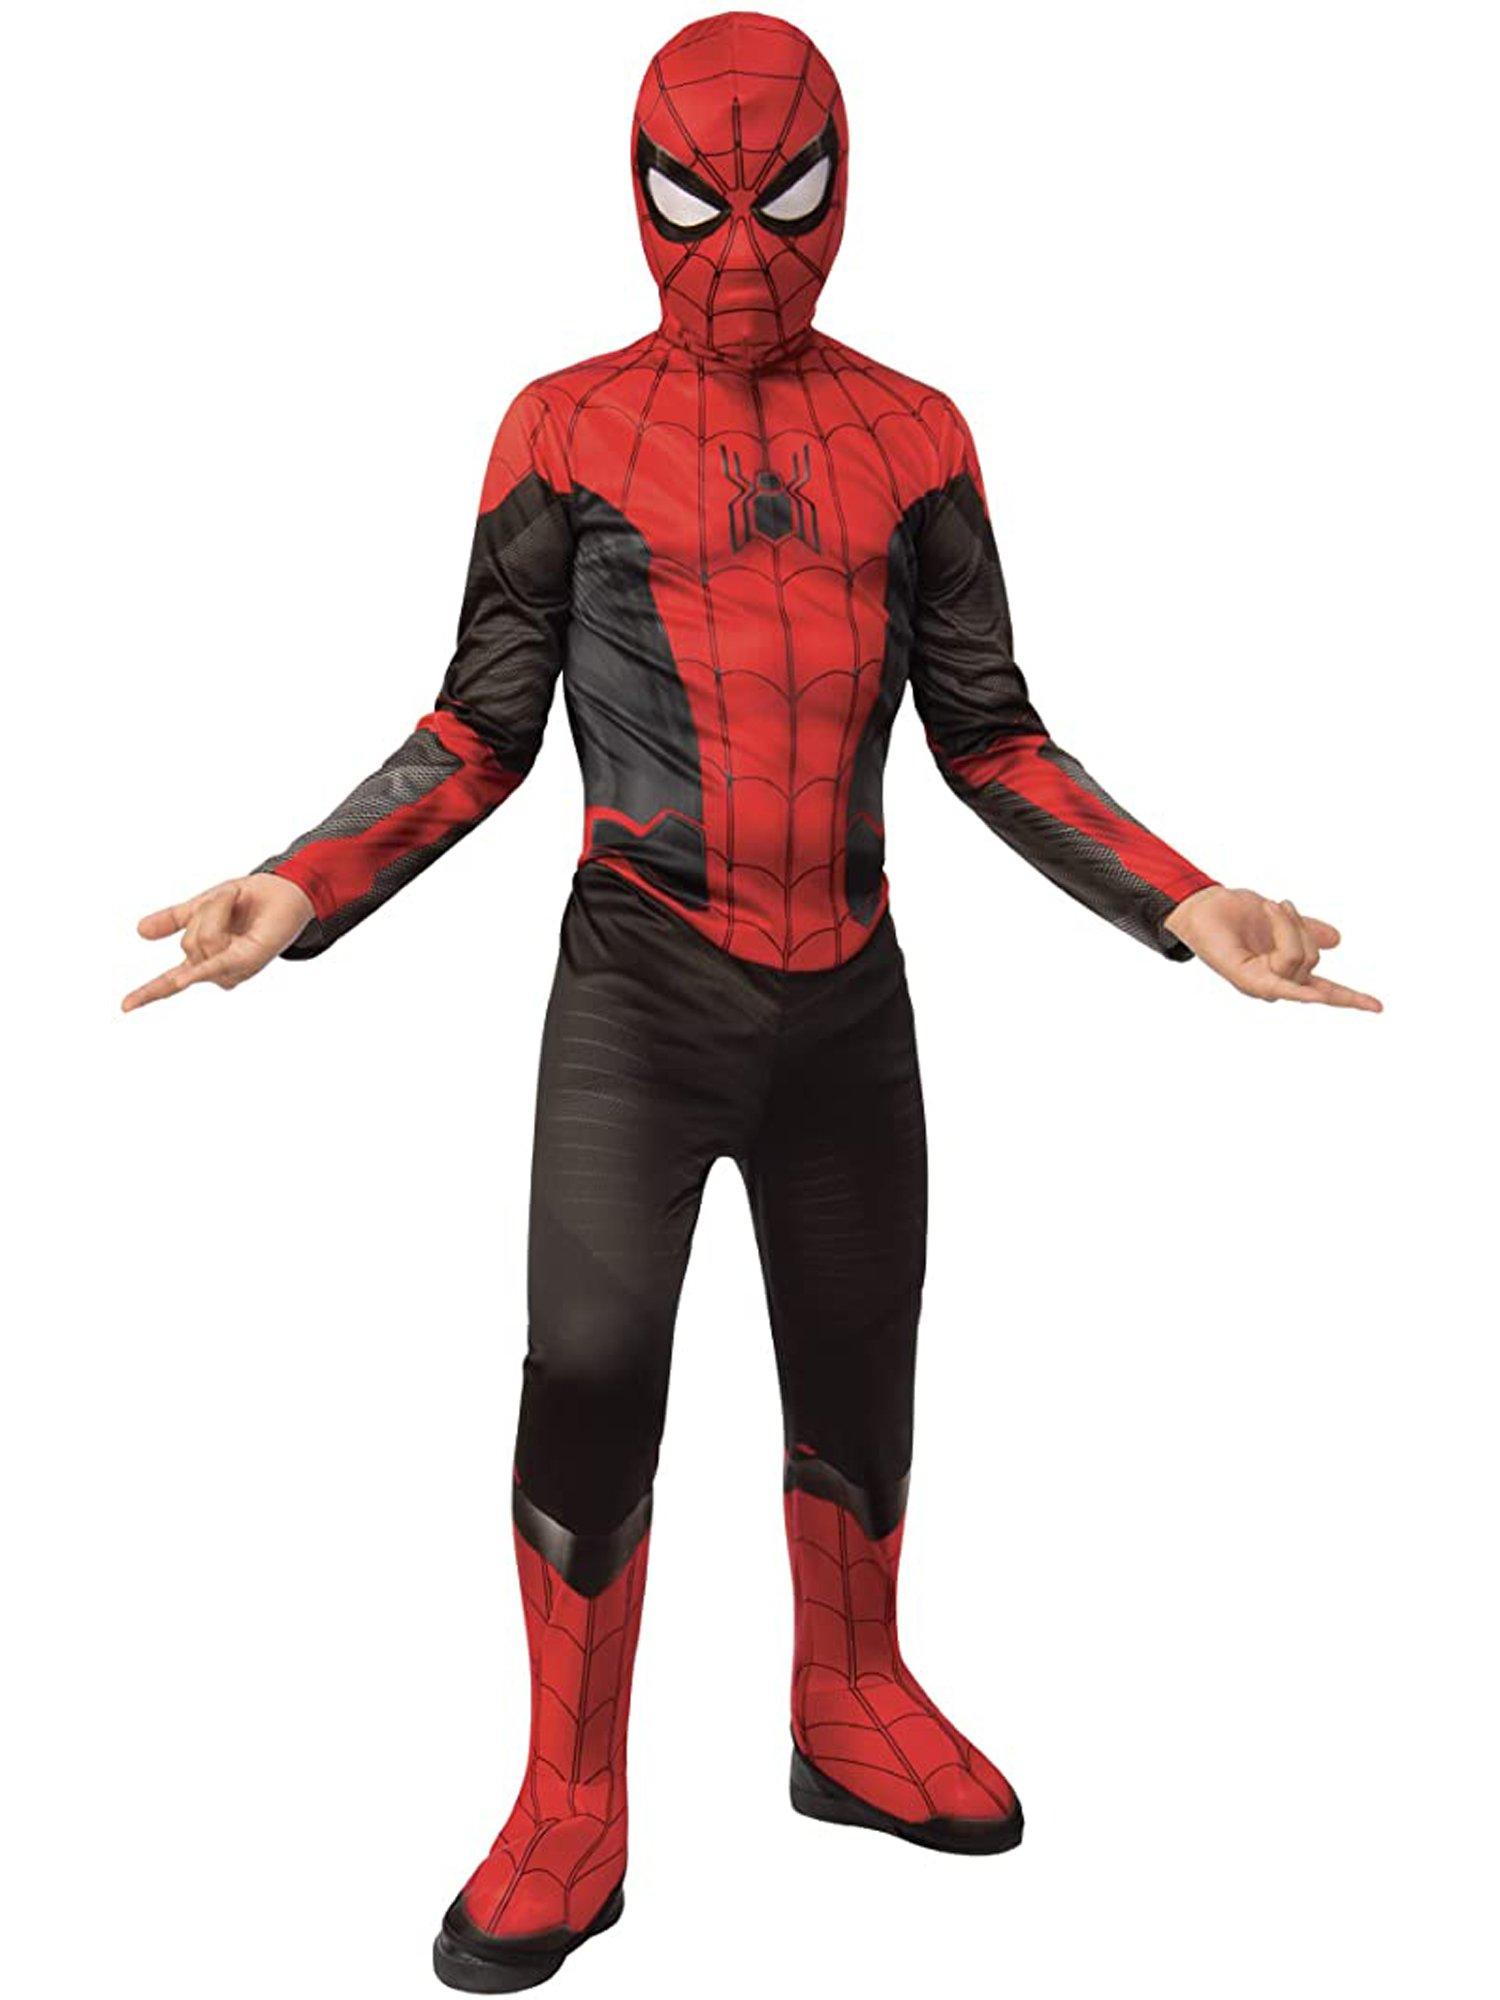 Kids Spider-Man Costume From Marvel Spider-Man: No Way Home